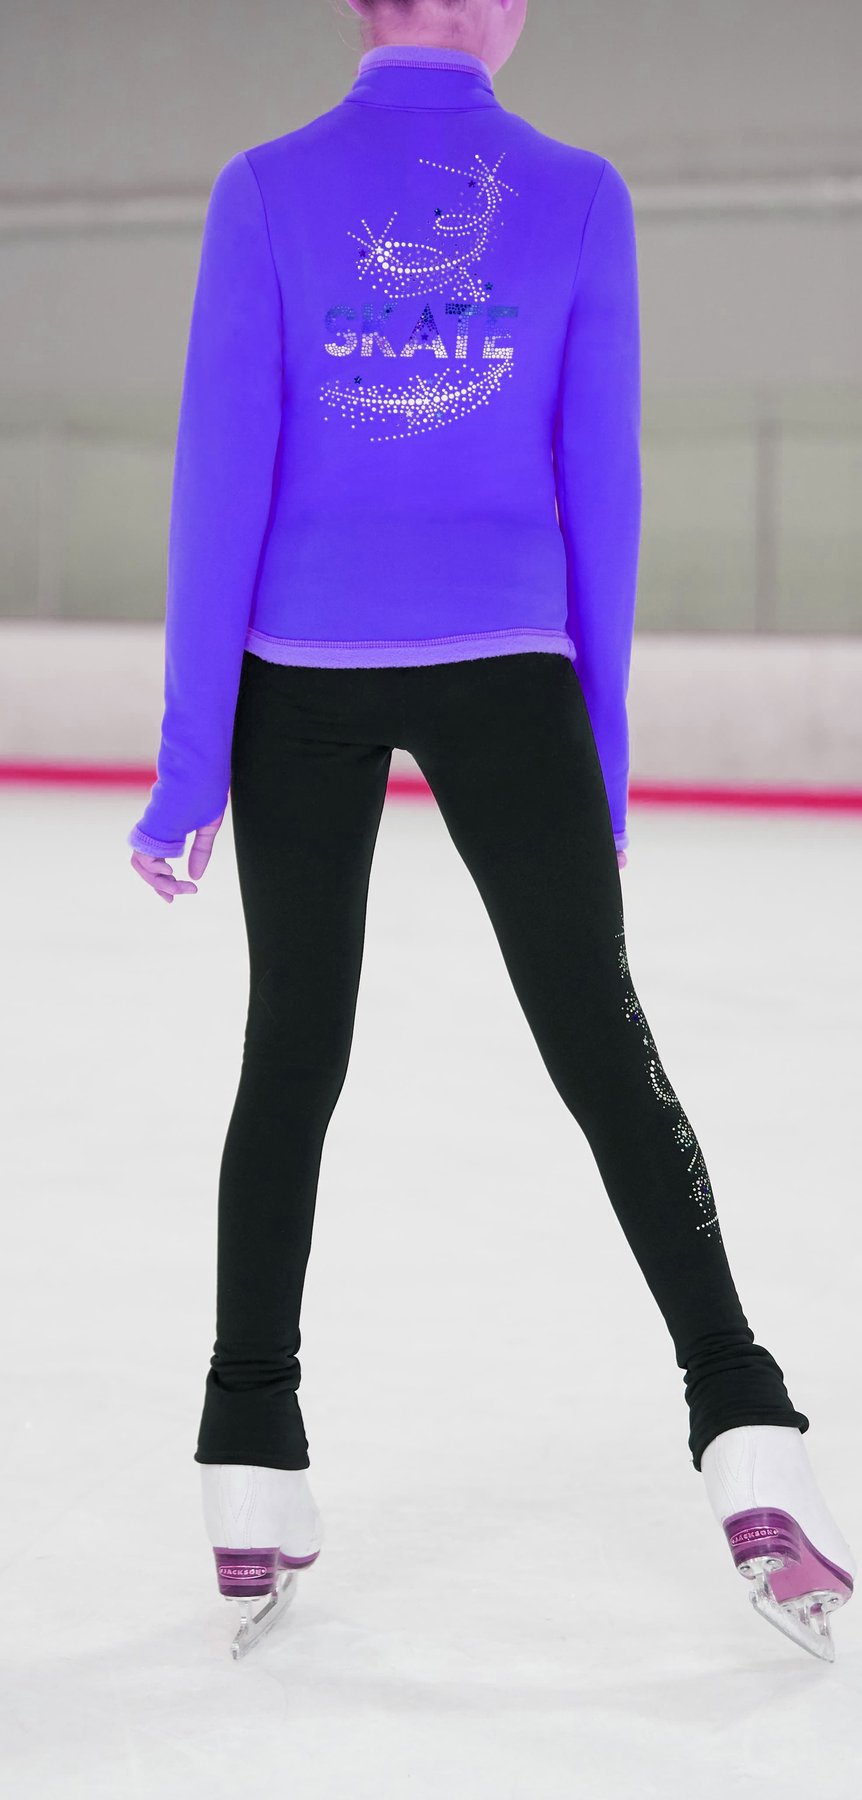 Mondor Girl's Performance Polartec Figure Skating Jacket